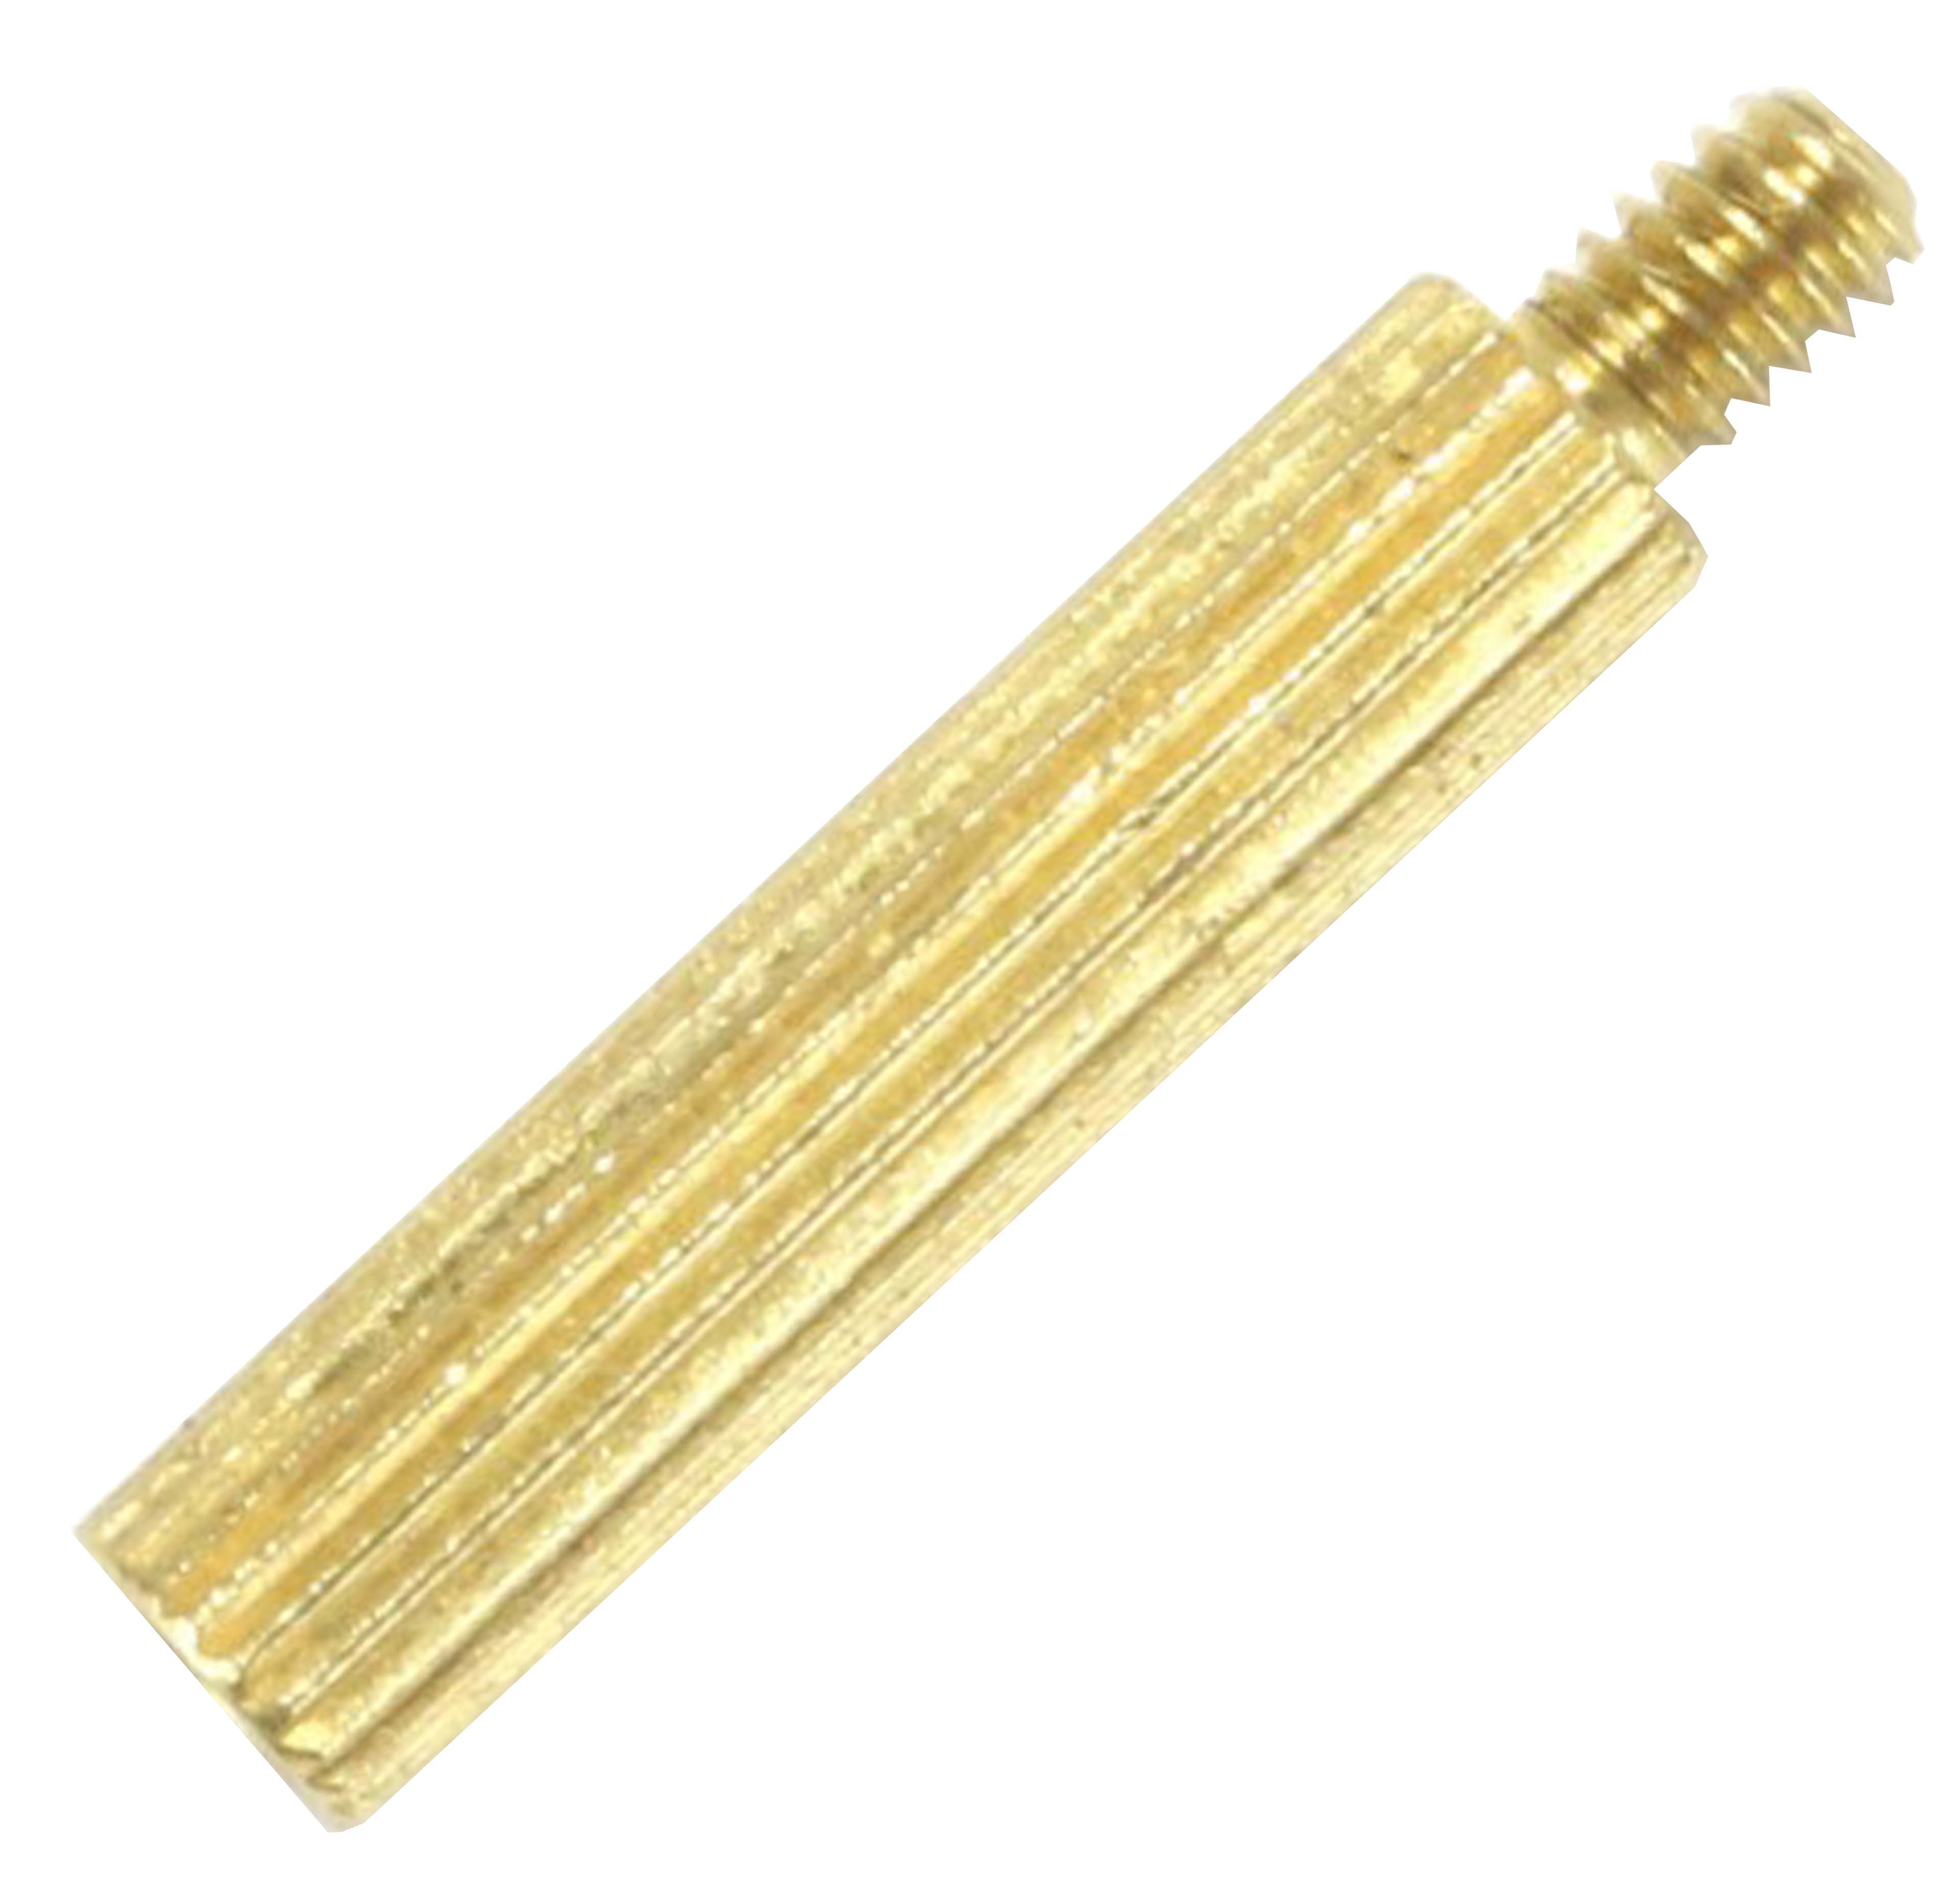 Brass Spacers Male / Female M2x25 + 3mm (x10)